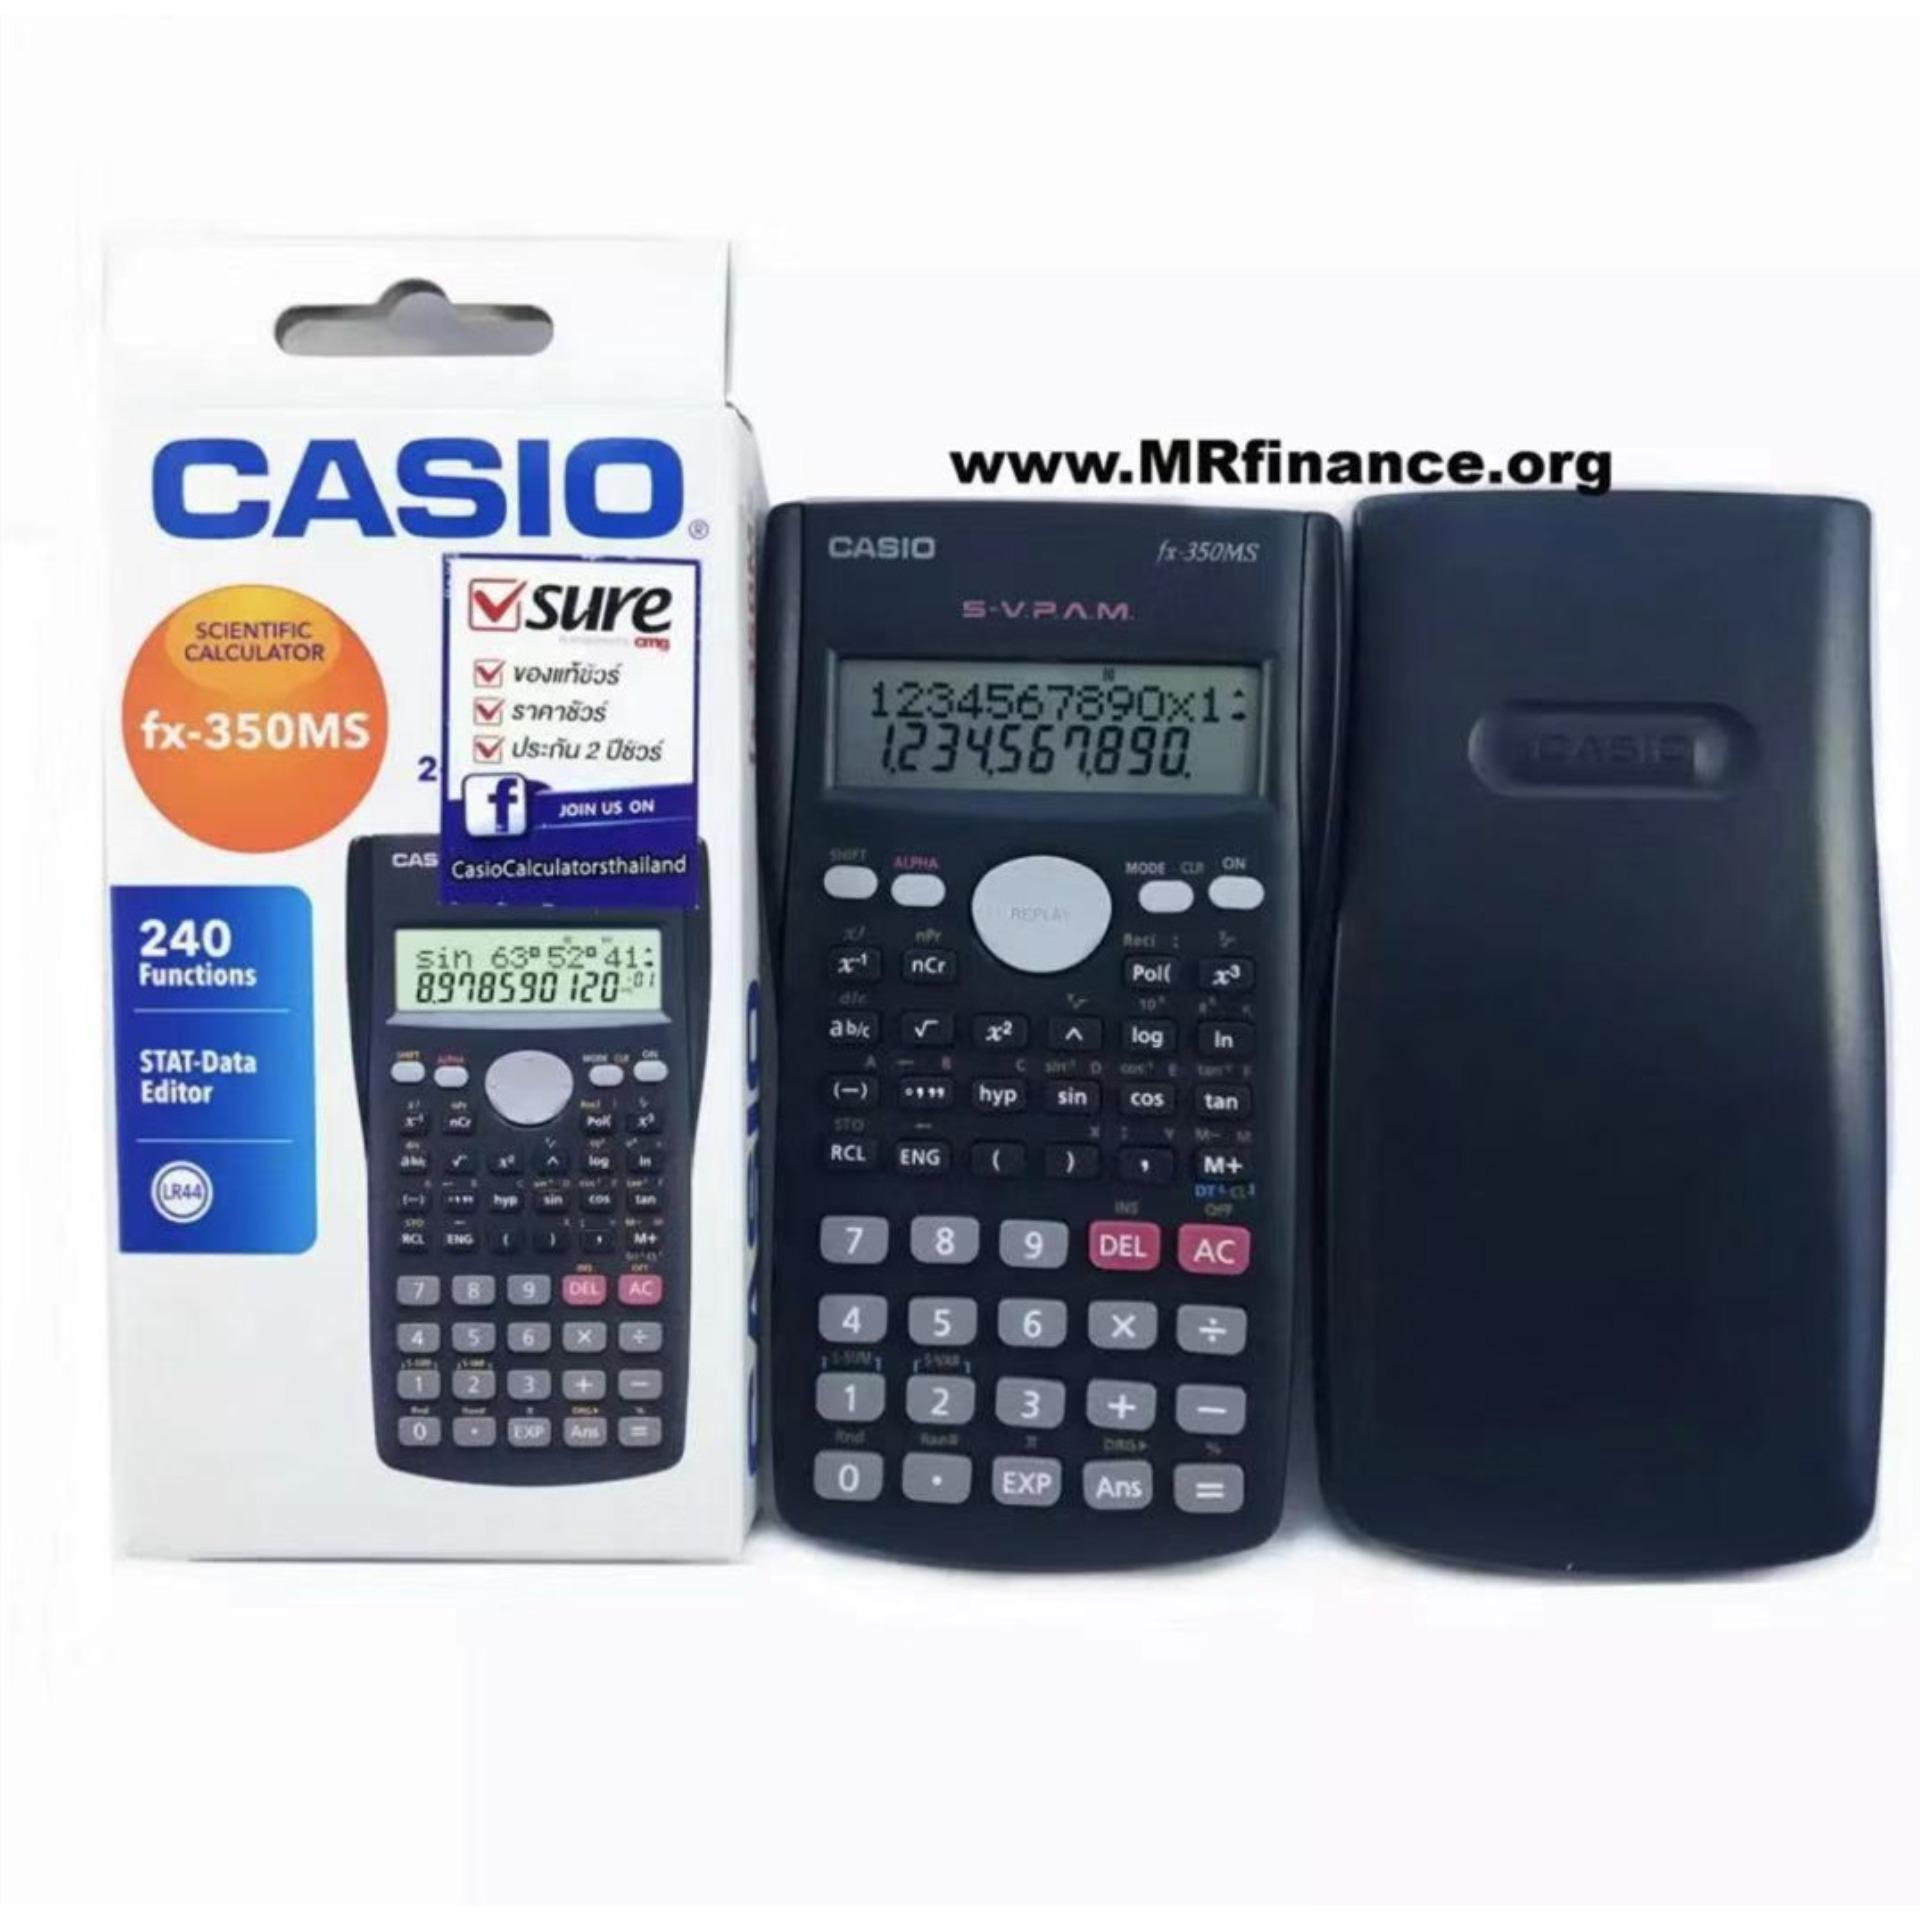 Casio เครื่องคิดเลขวิทยาศาสตร์คาสิโอ รุ่น fx-350MS